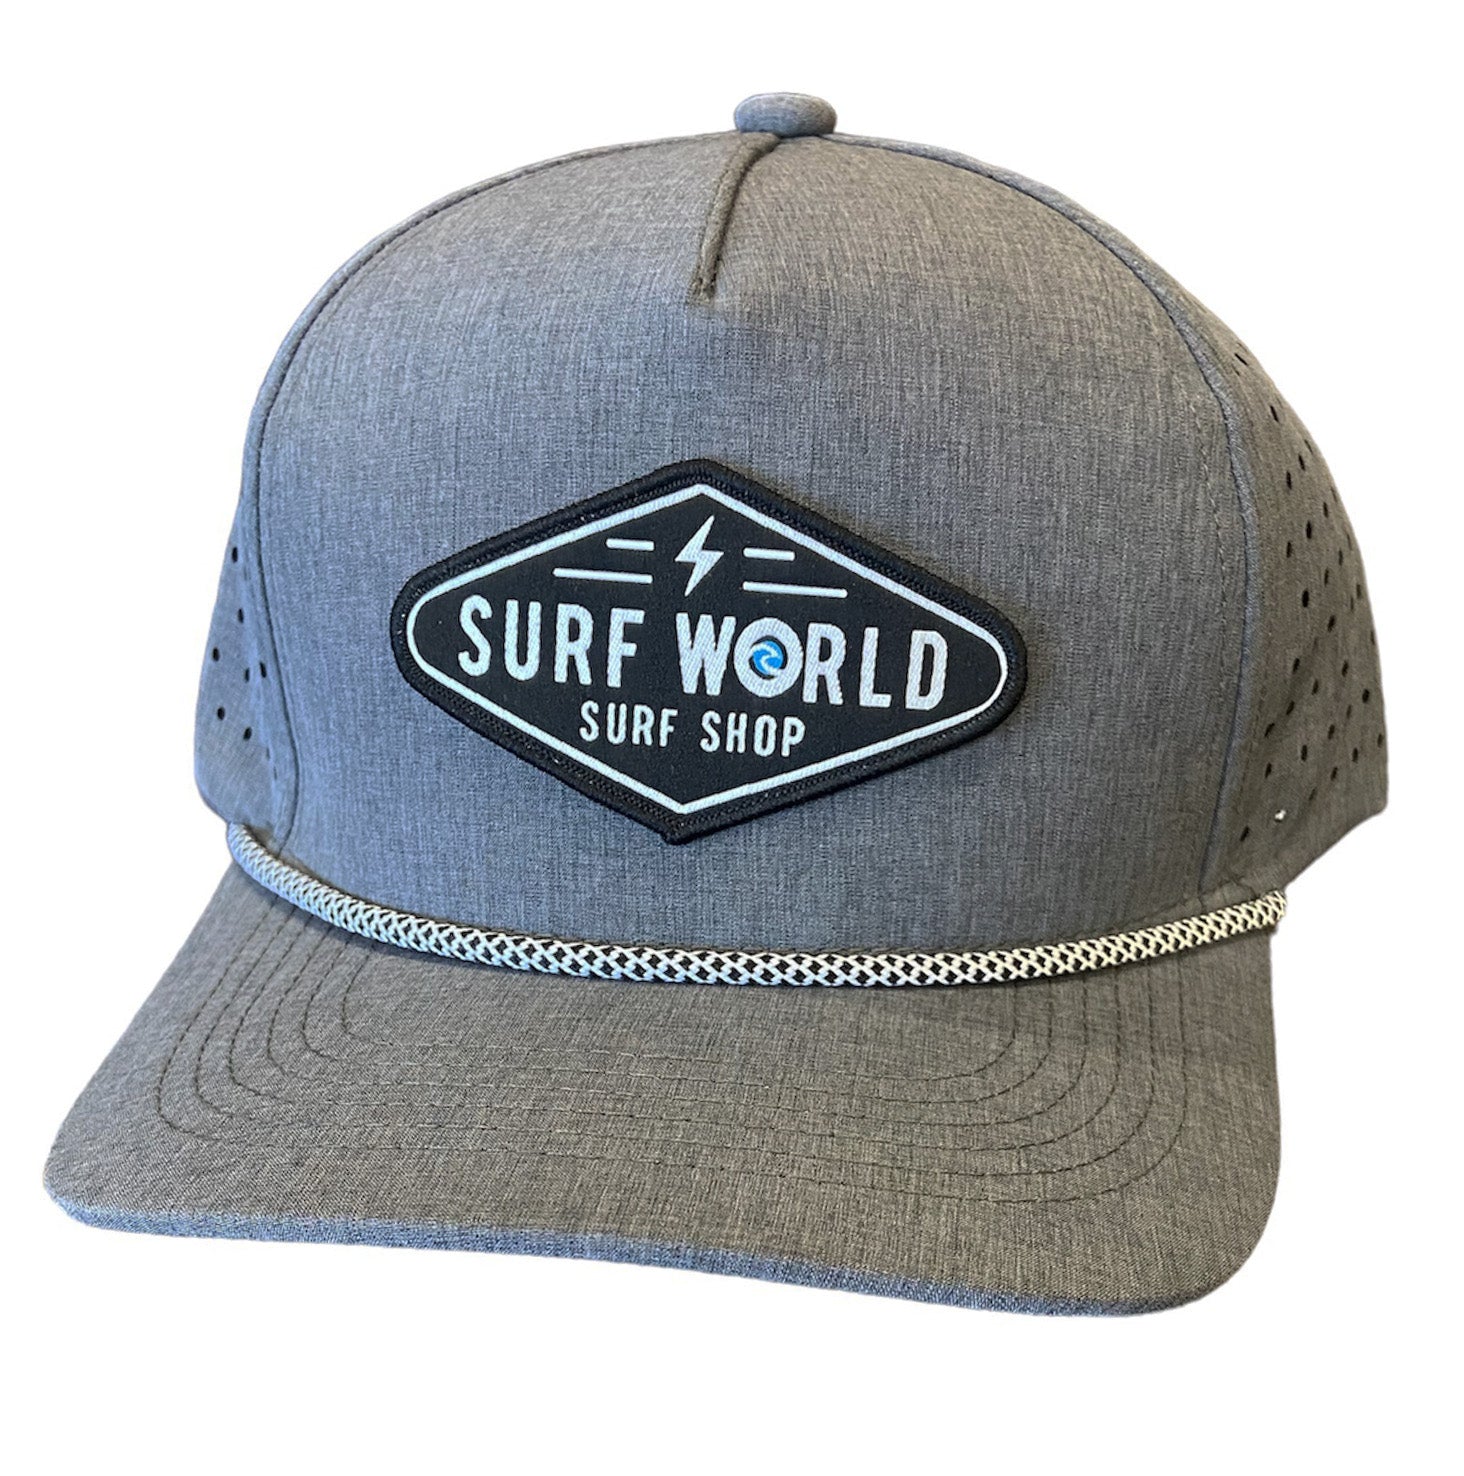 Surf World Performance Snap Back Hat - Black / Grey / White Hats Charcoal Boltz